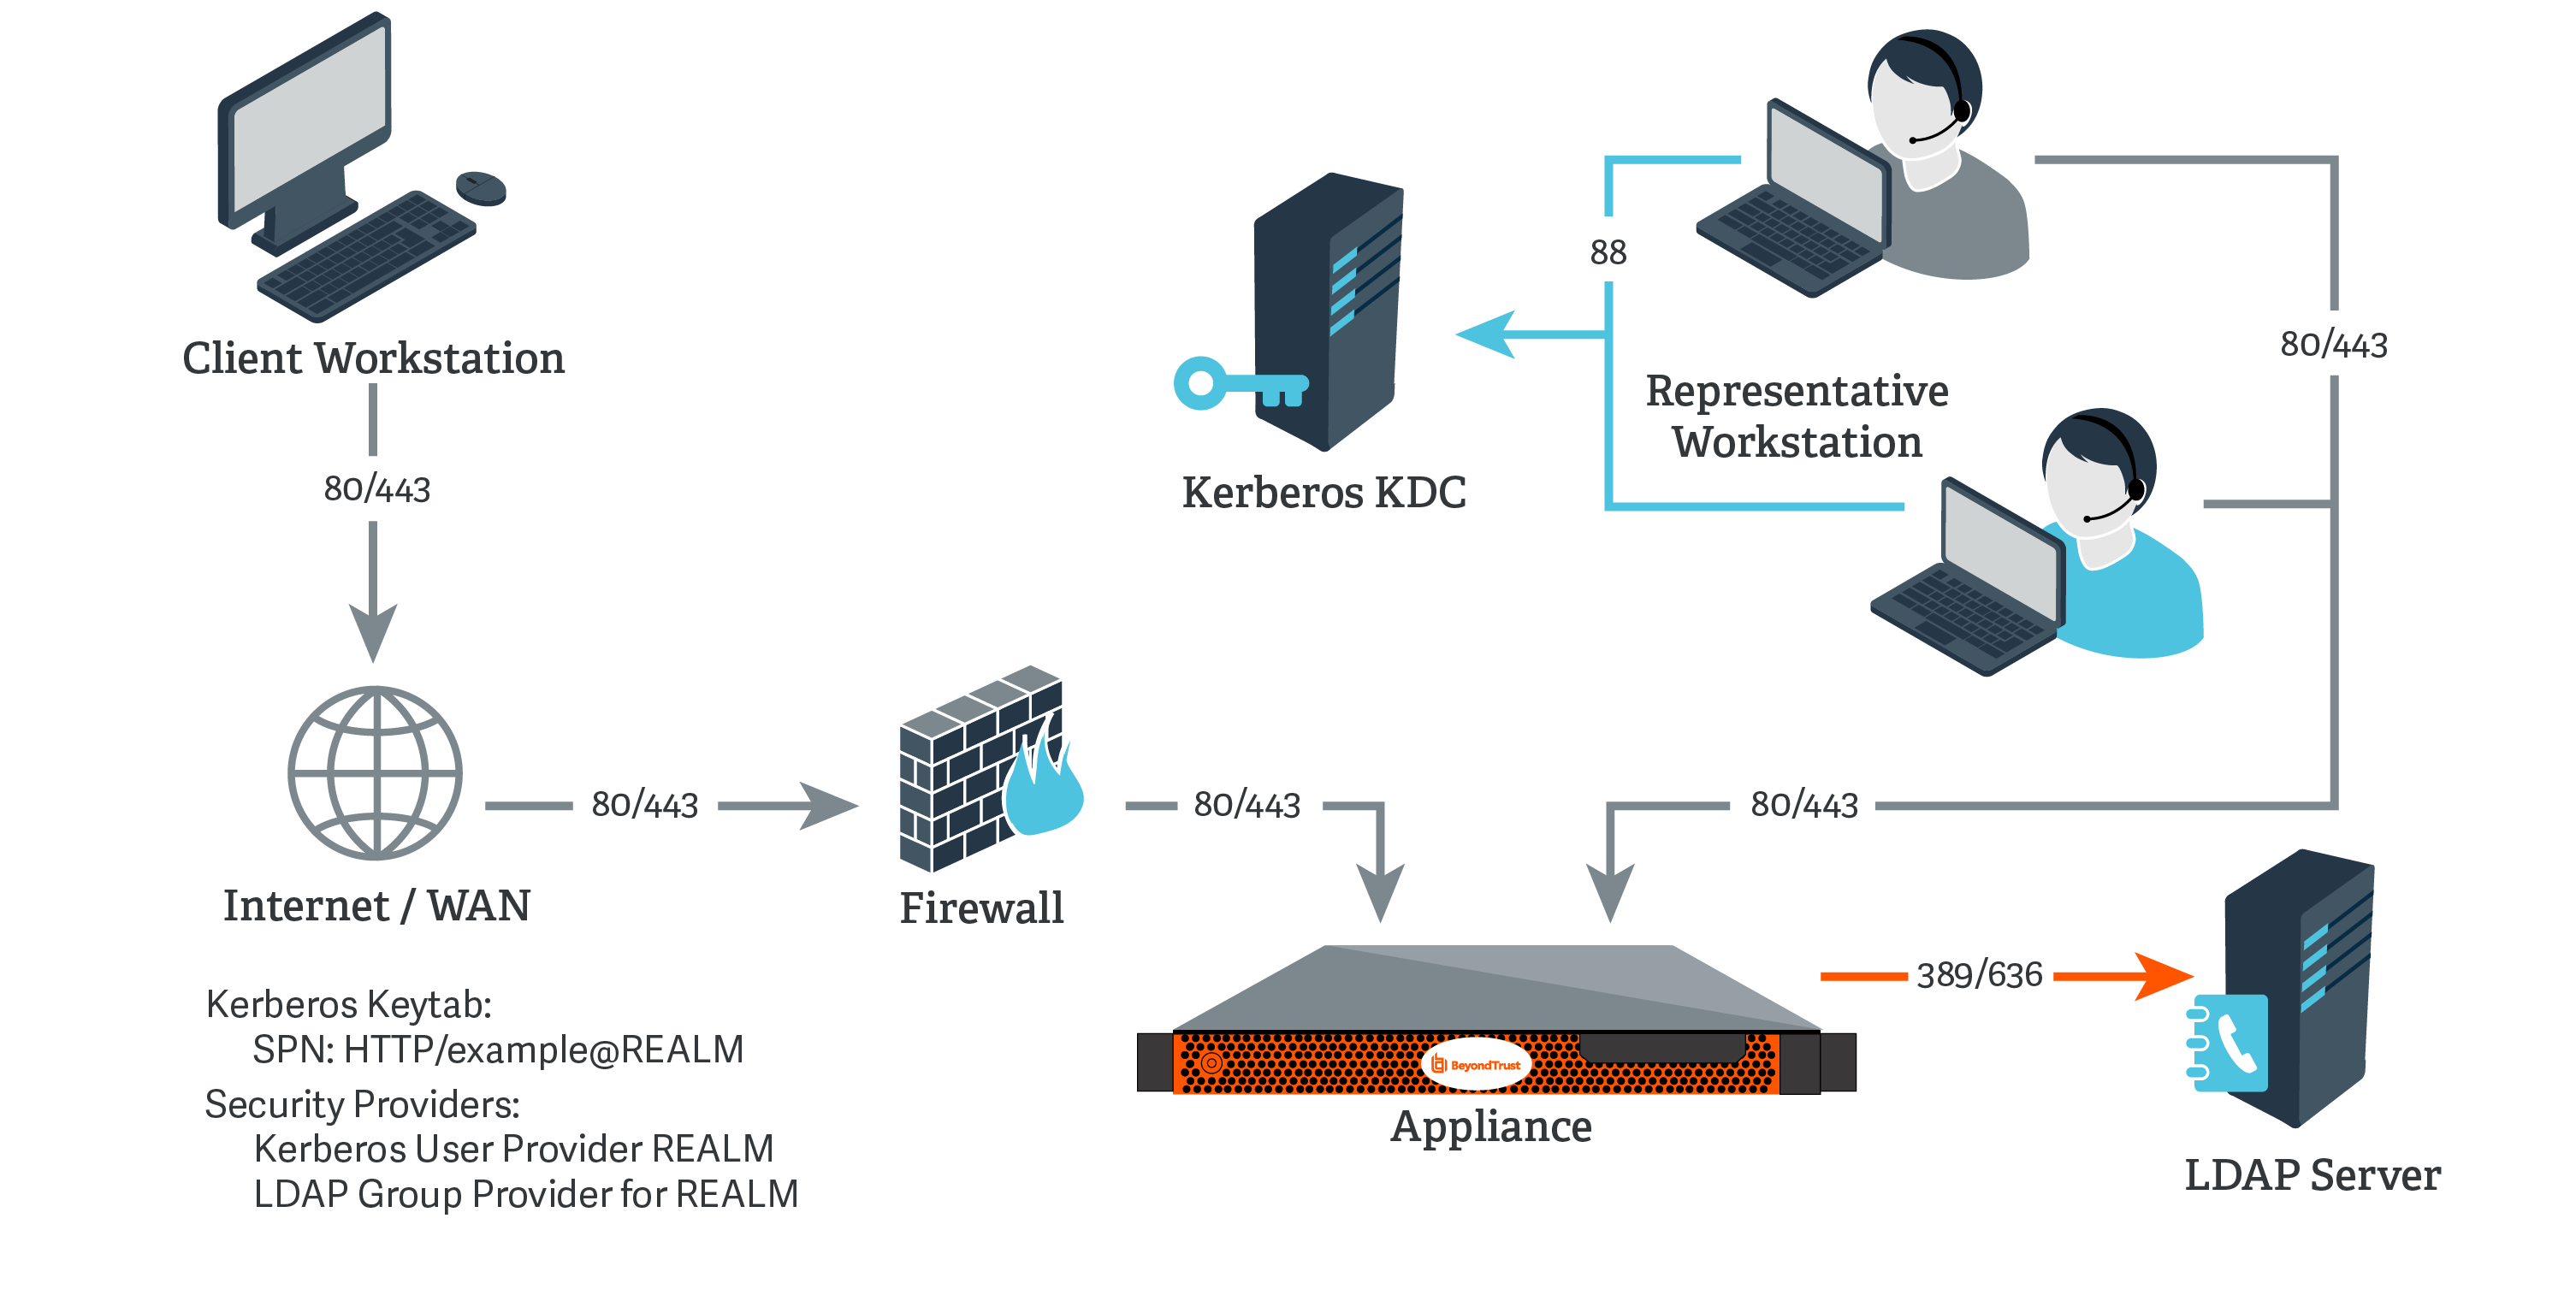 Network Setup Example 2: Kerberos KDC and LDAP Server on the Same Network